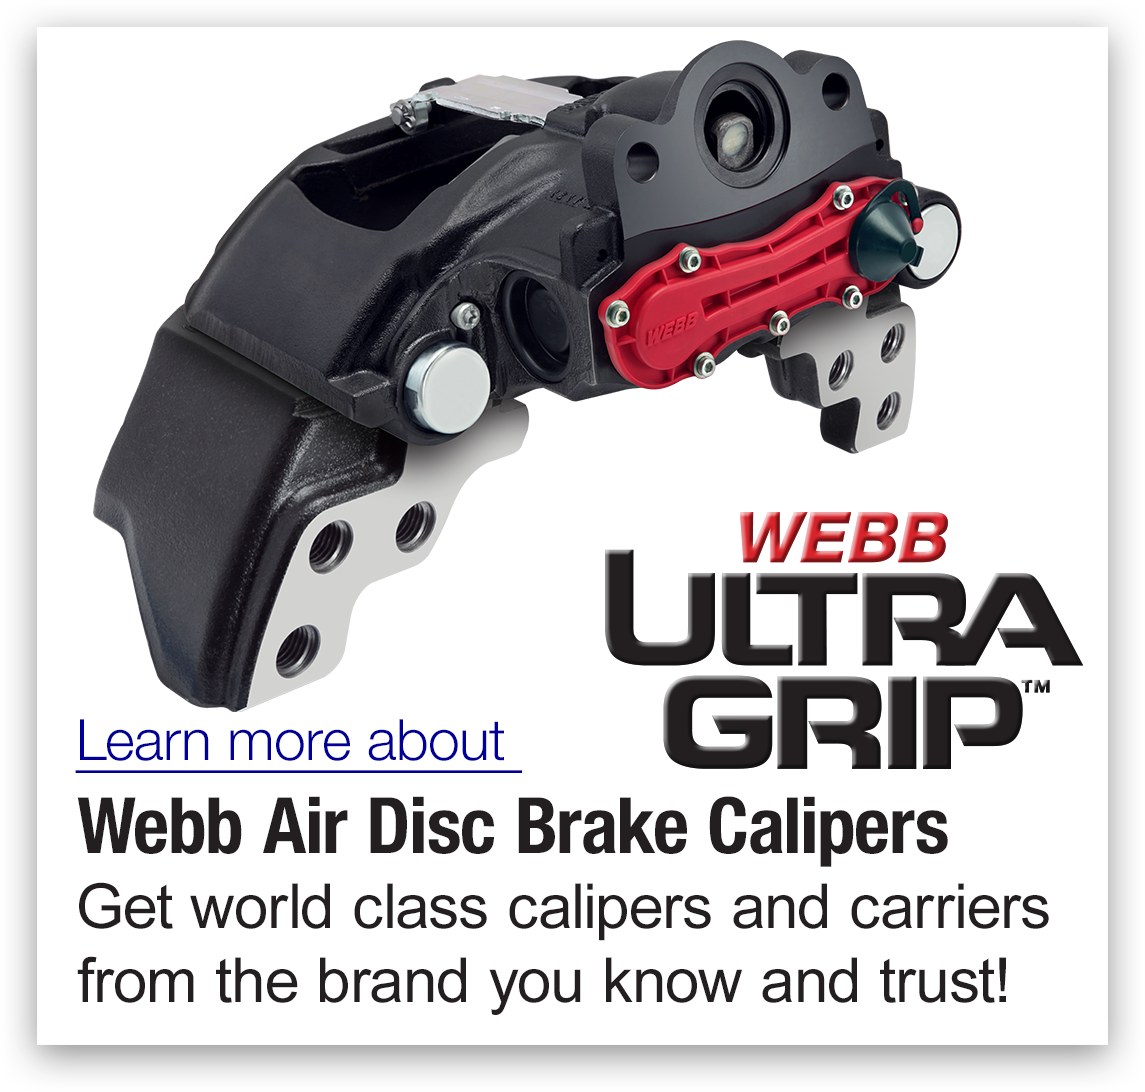 Webb Ultra Grip calipers